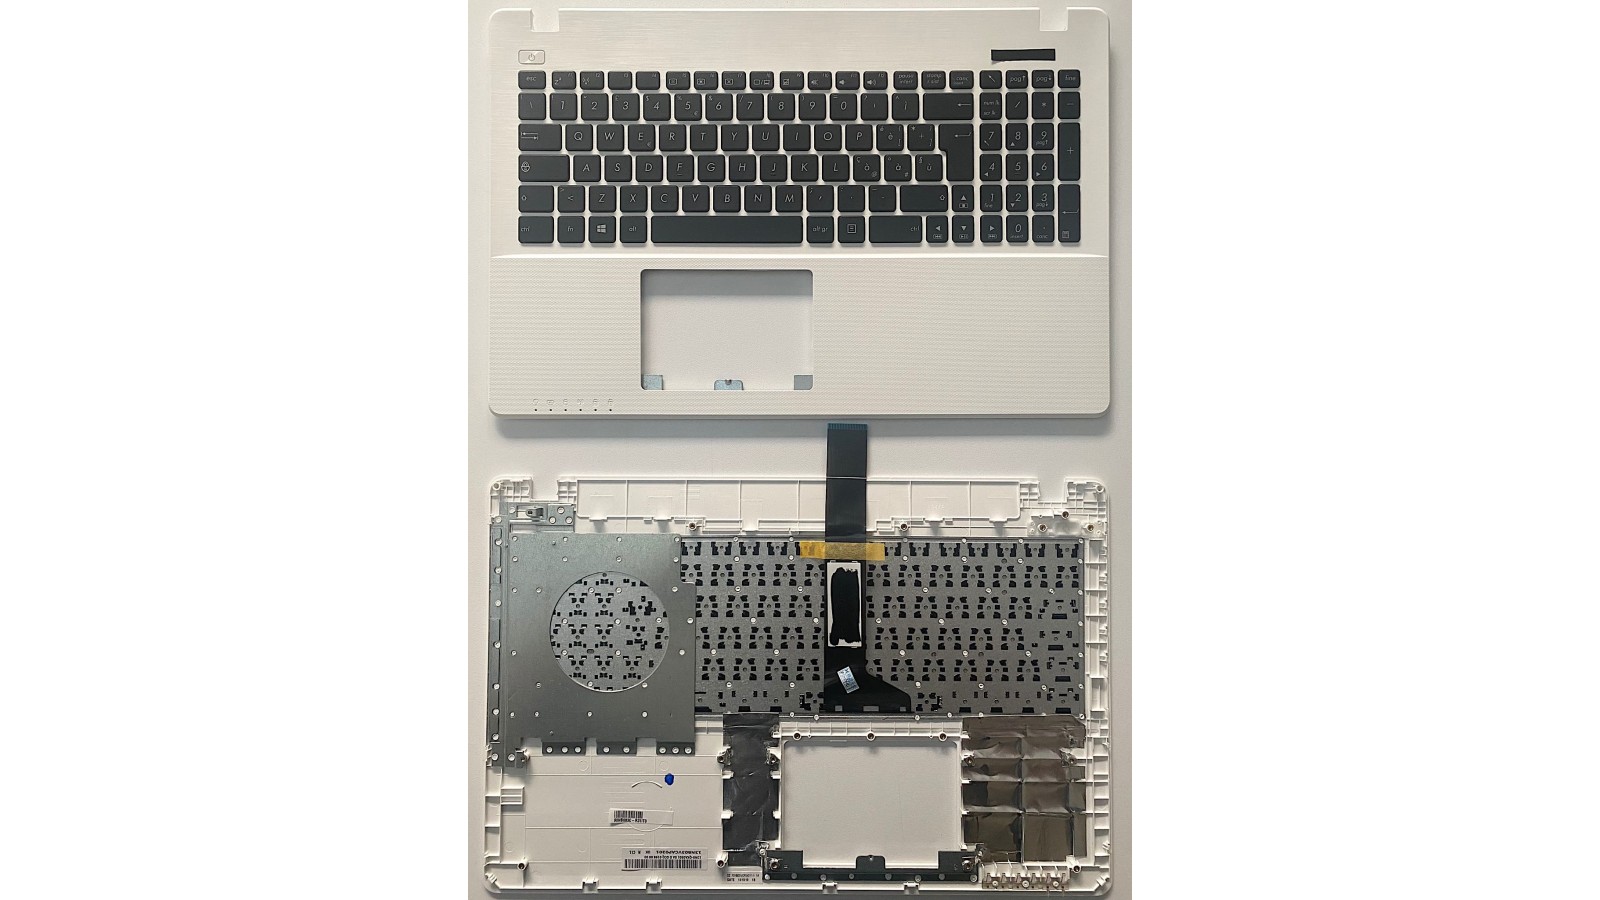 Tastiera con Topcase italiana per Asus X550 X550V X550CC X550CA X550VC X550C Bianco